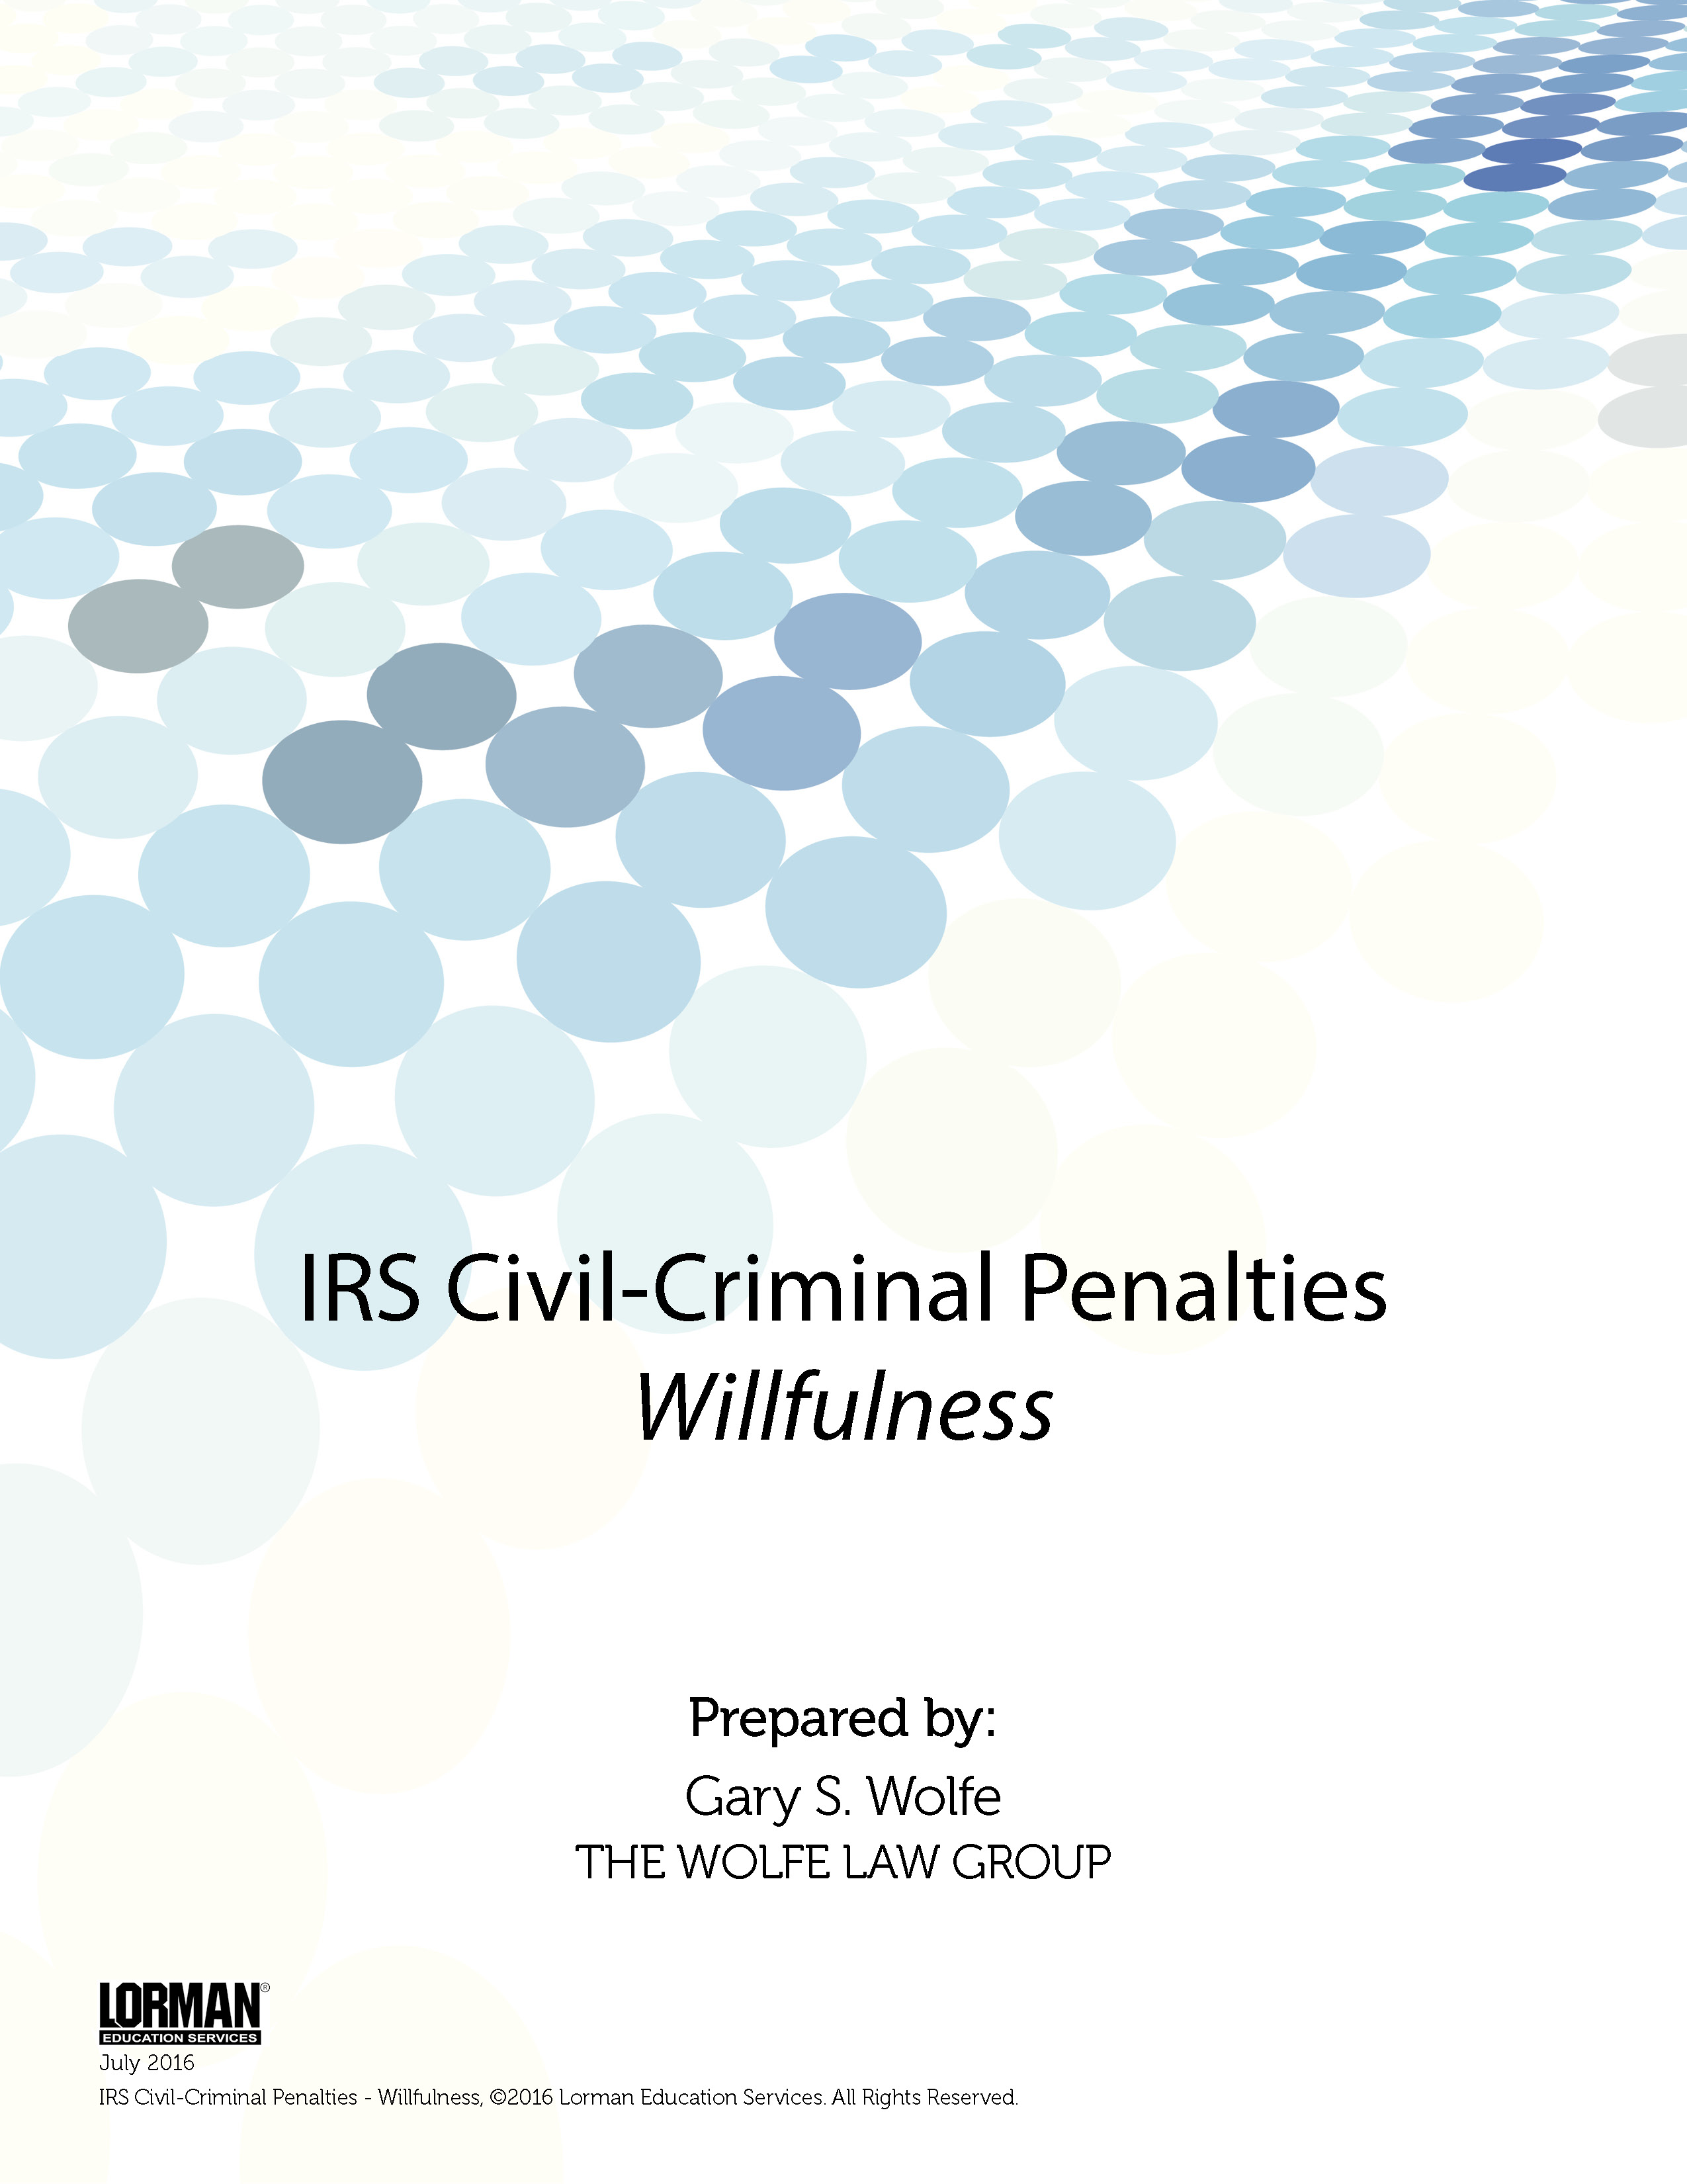 IRS Civil-Criminal Penalties - Willfulness